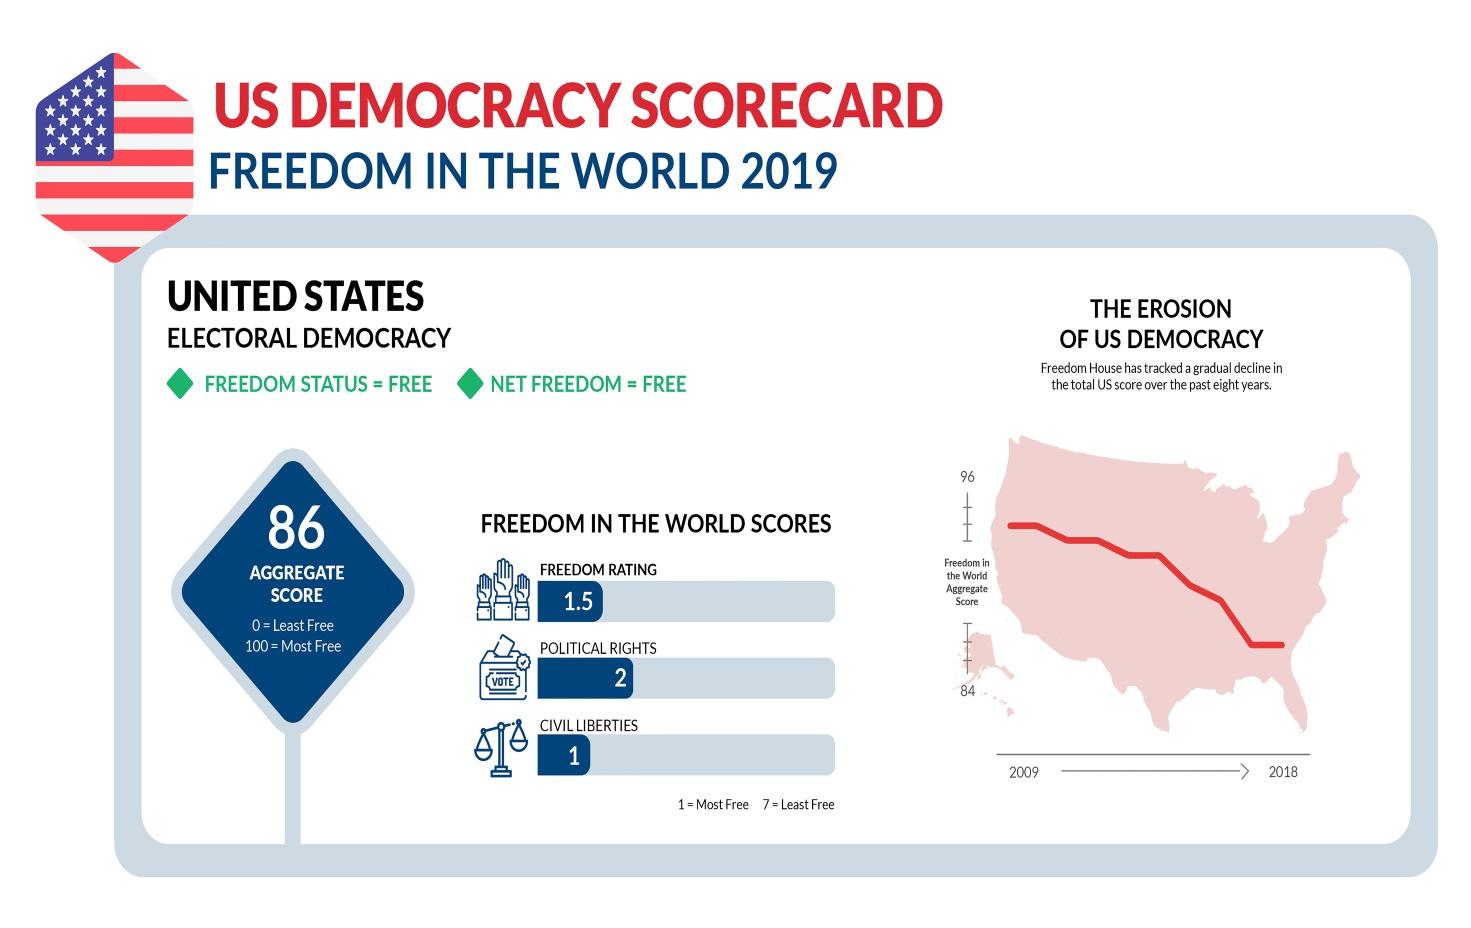 https://freedomhouse.org/sites/default/files/US_Democracy_Scoreboard_Resized_FIW2019.jpg